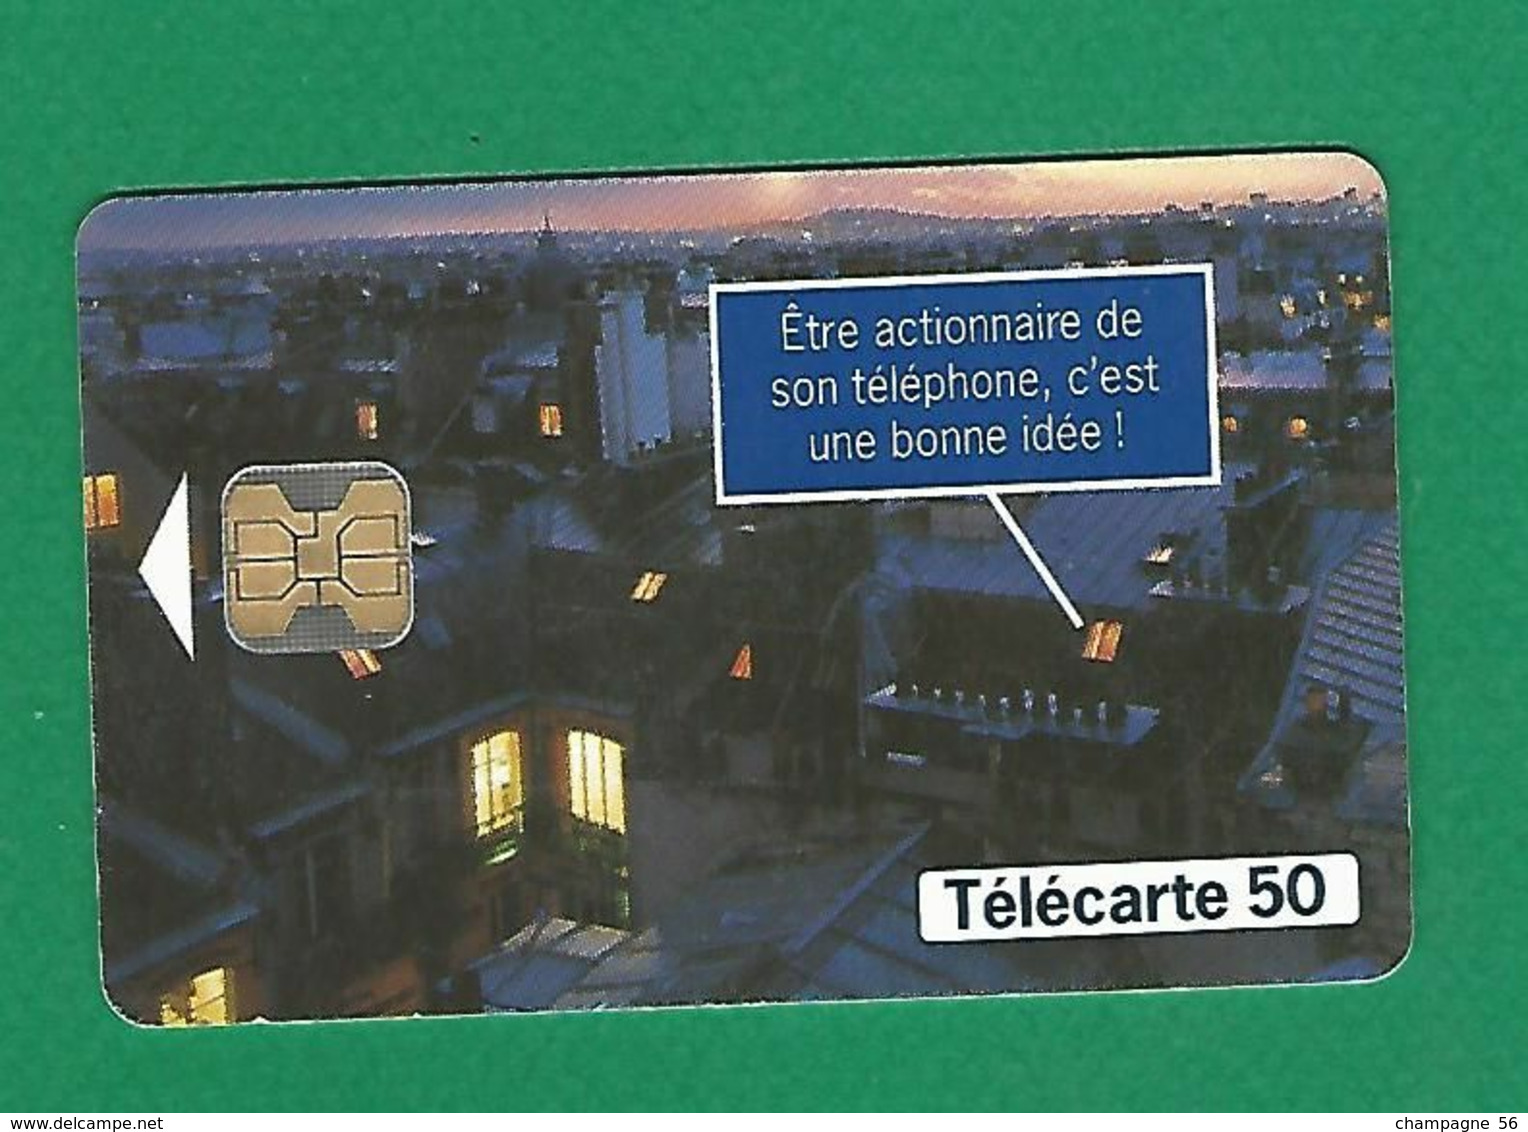 VARIÉTÉS FRANCE 97 F784E 50 / 05/97  OB2  TOITS CAPITAL FRANCE TELECOM  50 UNITES UTILISÉE - Varietà